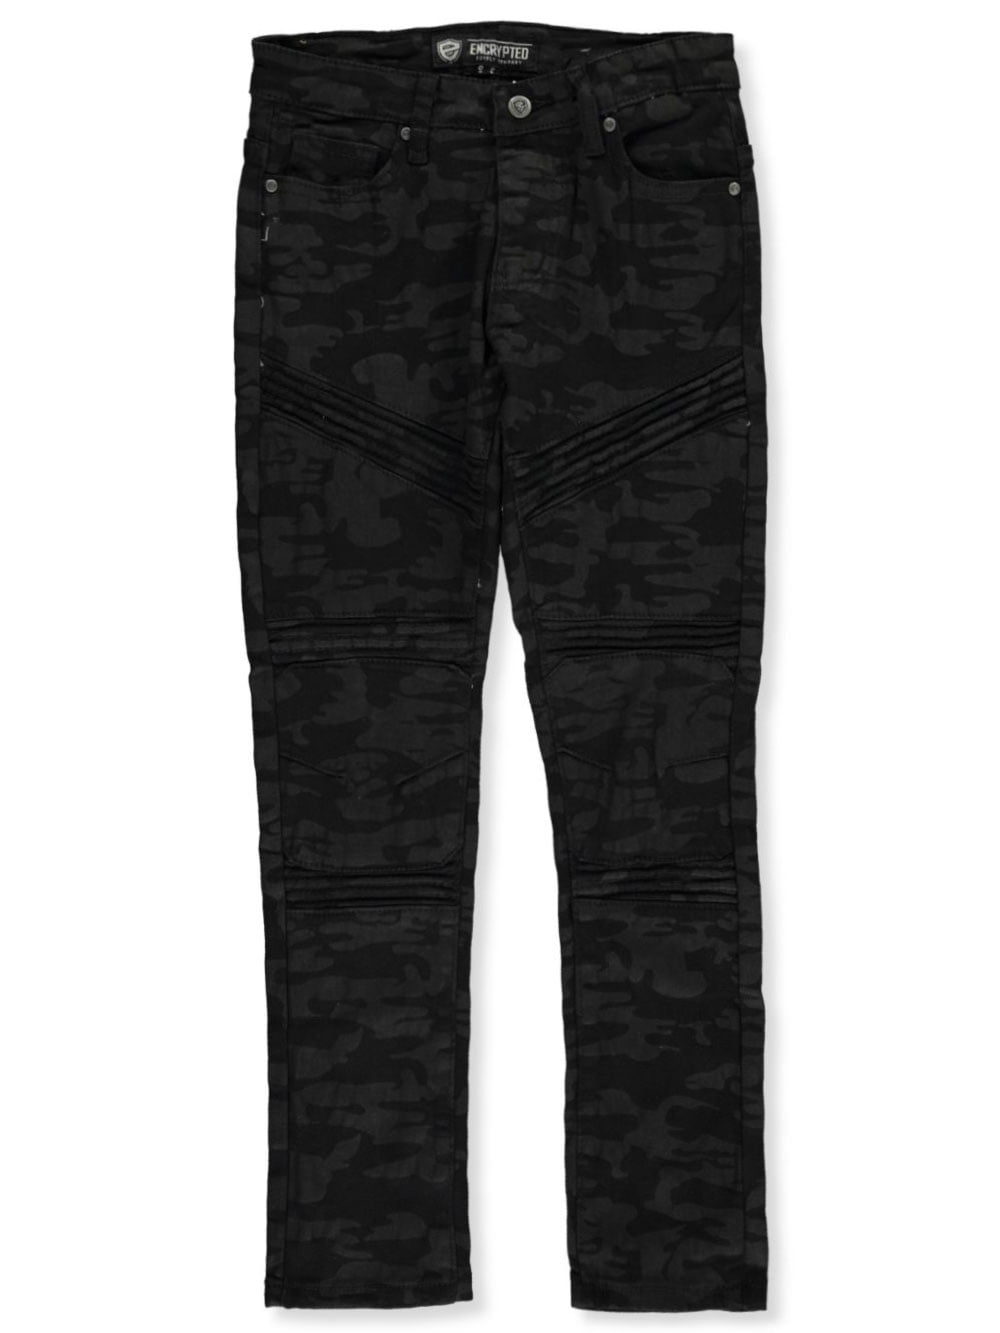 black camo skinny jeans